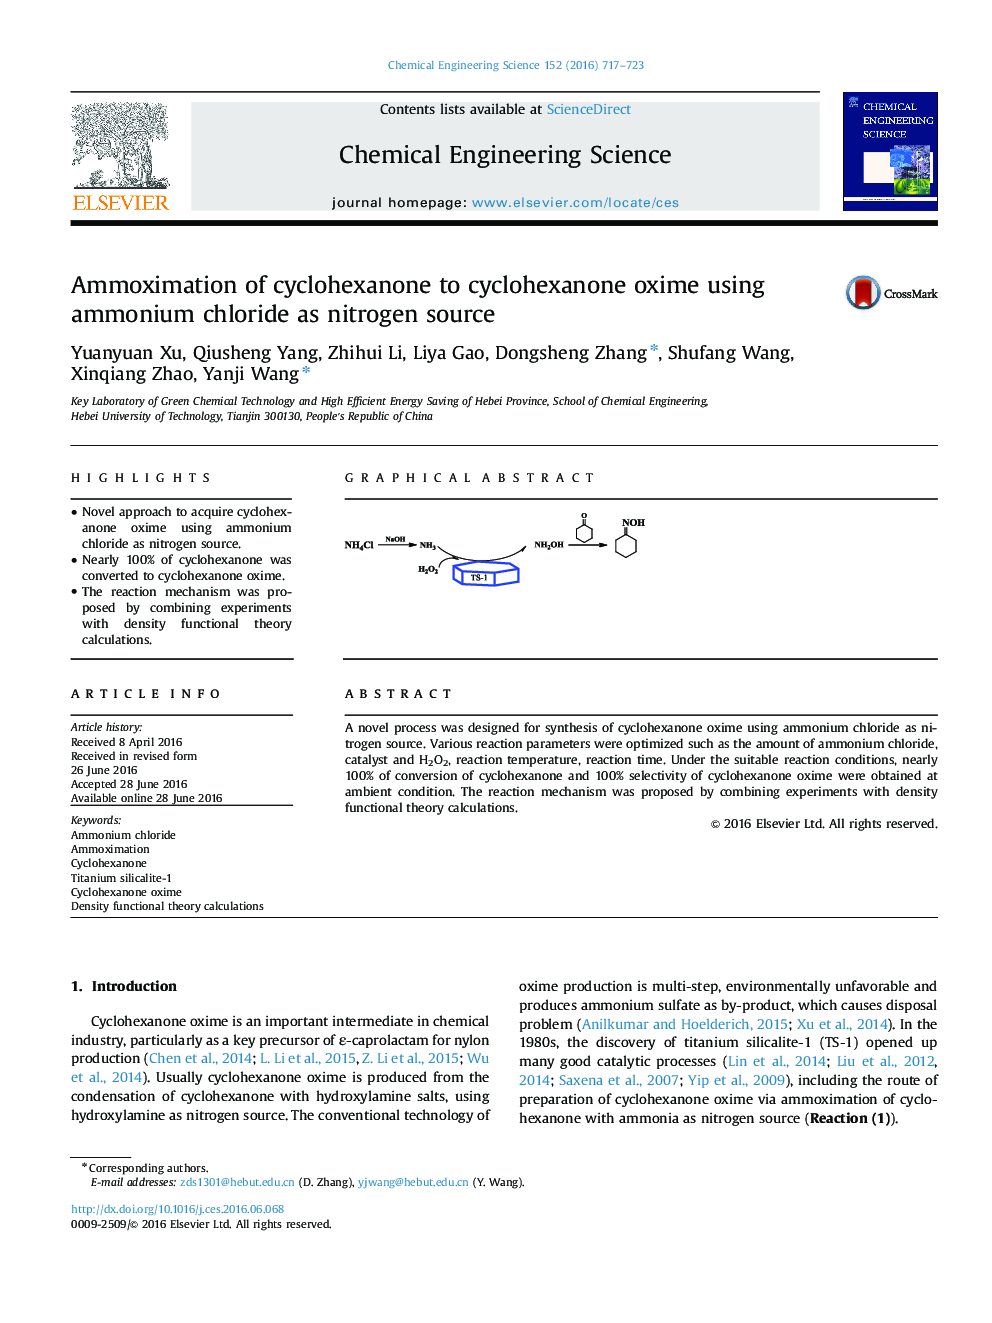 Ammoximation of cyclohexanone to cyclohexanone oxime using ammonium chloride as nitrogen source